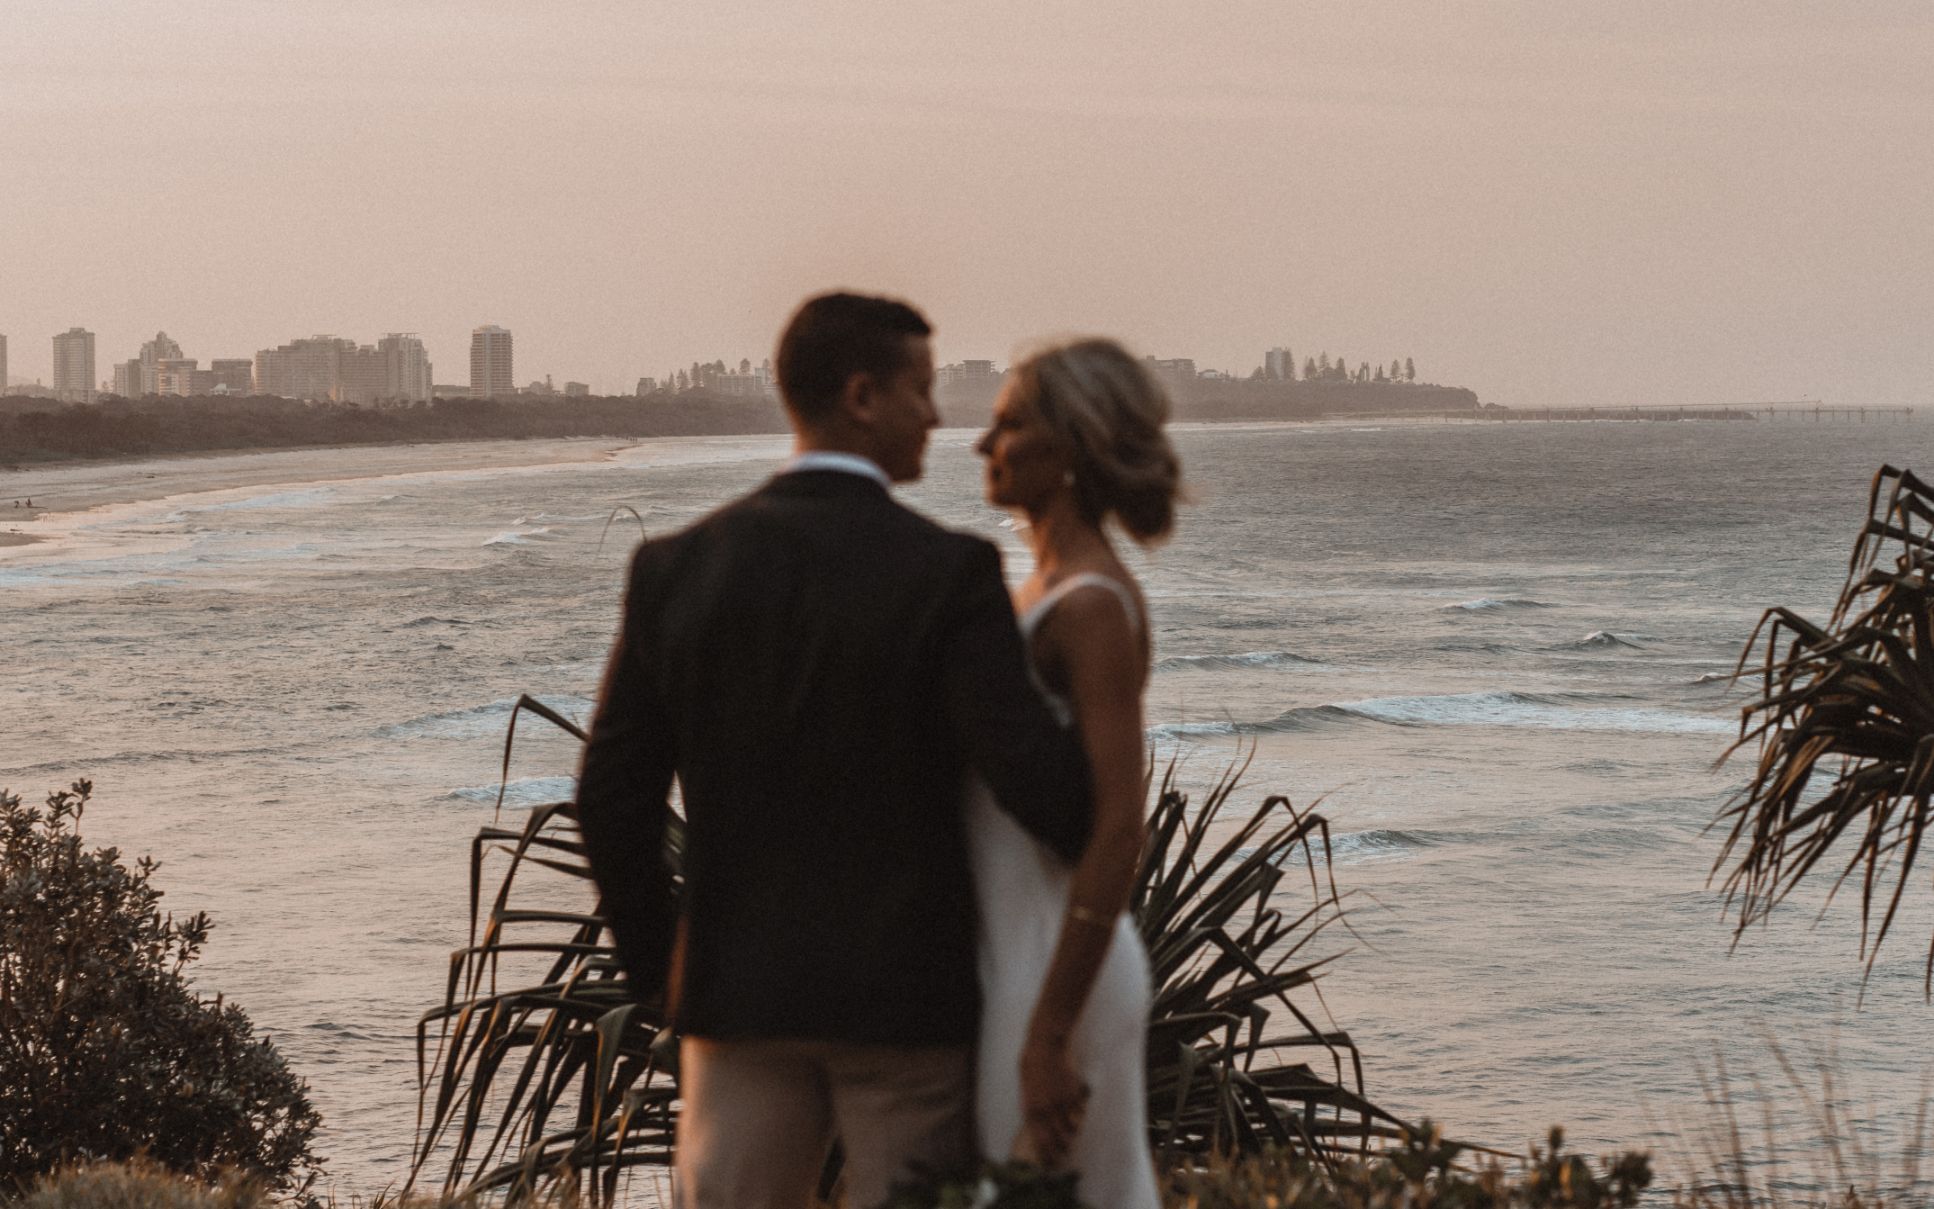 nathan lapham real weddings australia